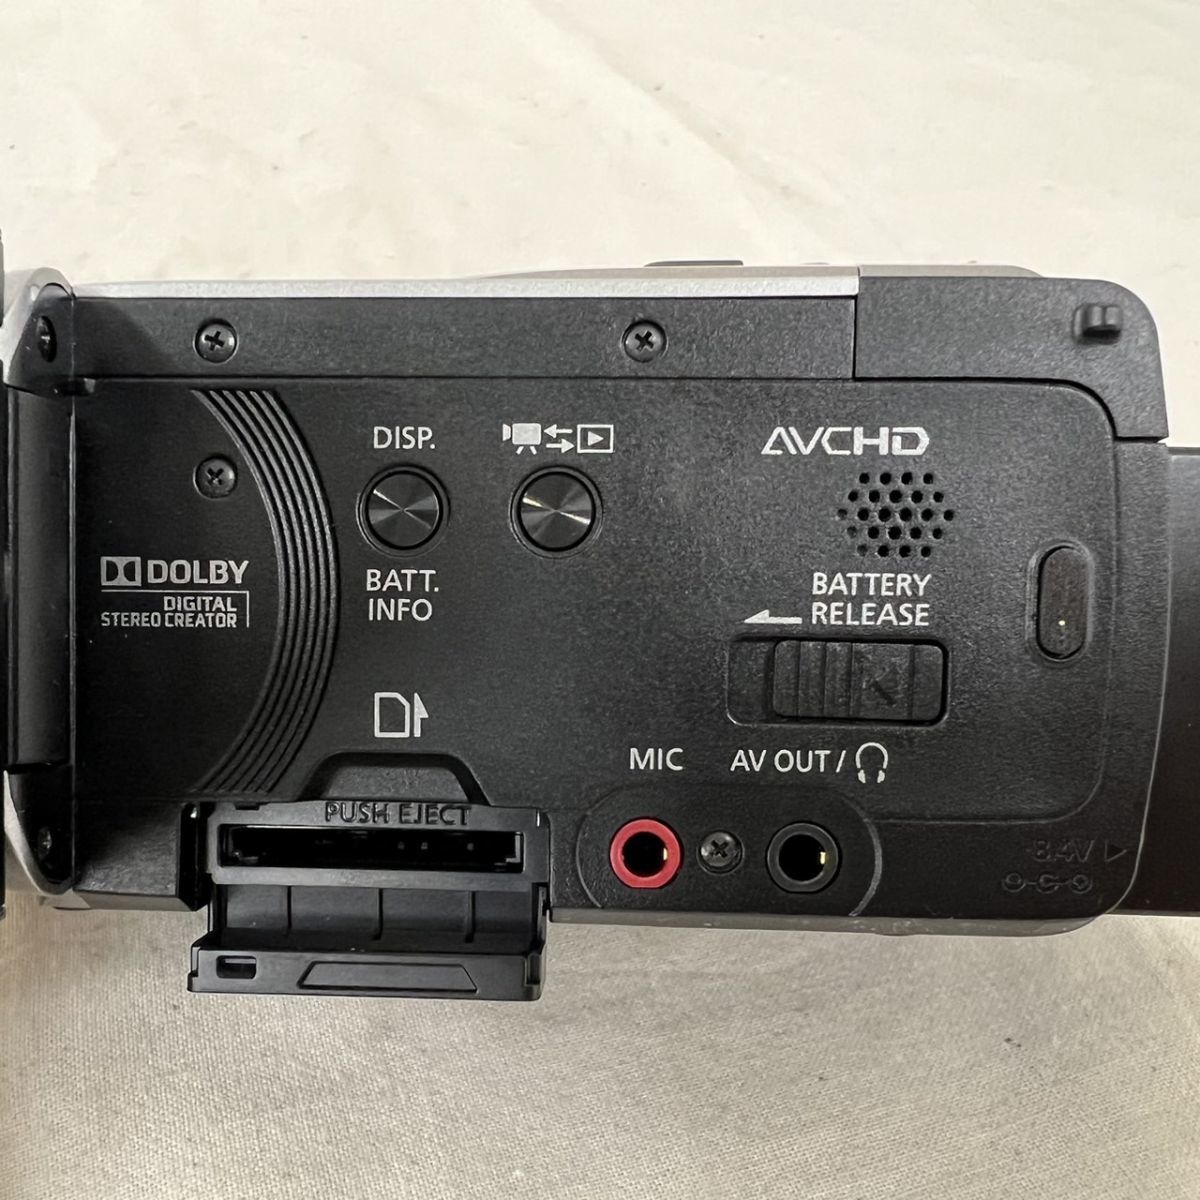 K213-H23-92 Canon キャノン iVIS HF M31 BUILT-IN MEMORY 32GB 15x OPTICAL ZOOM 4.1~61.5mm 1:1.8 151040344355 10年製 ビデオカメラ_画像8